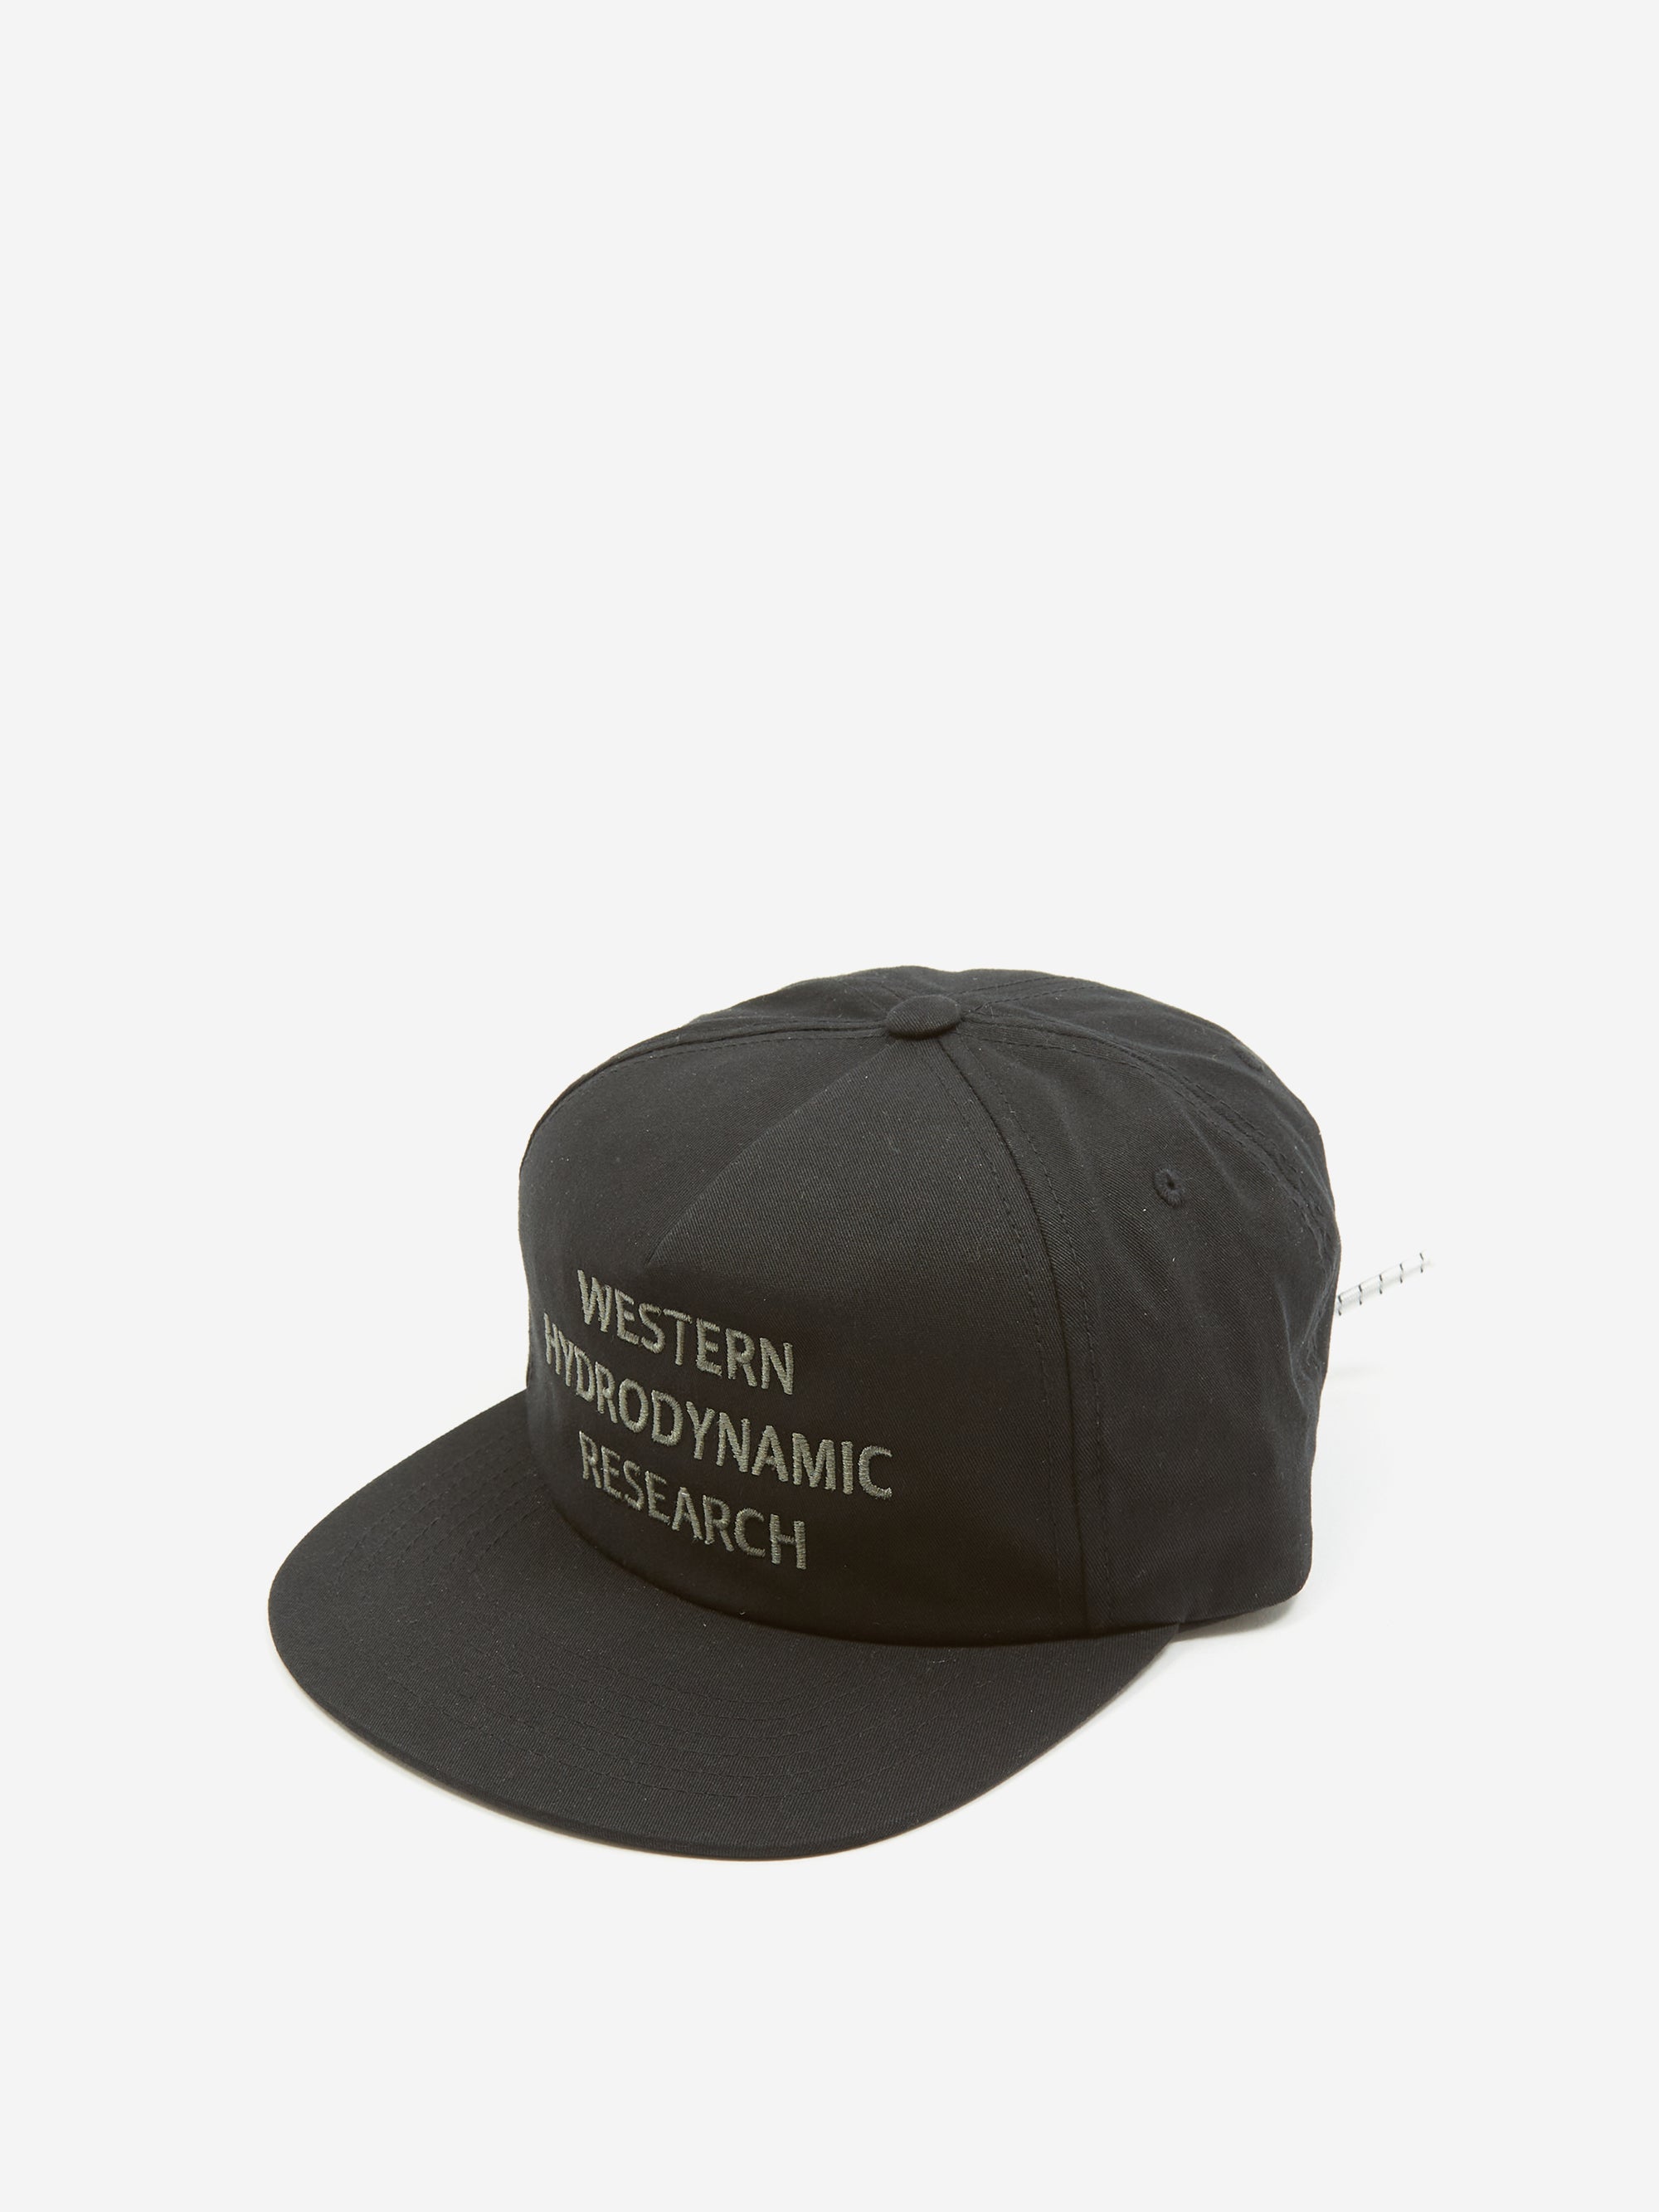 WESTERN HYDRODYNAMIC RESEARCH CAP キャップ - 帽子